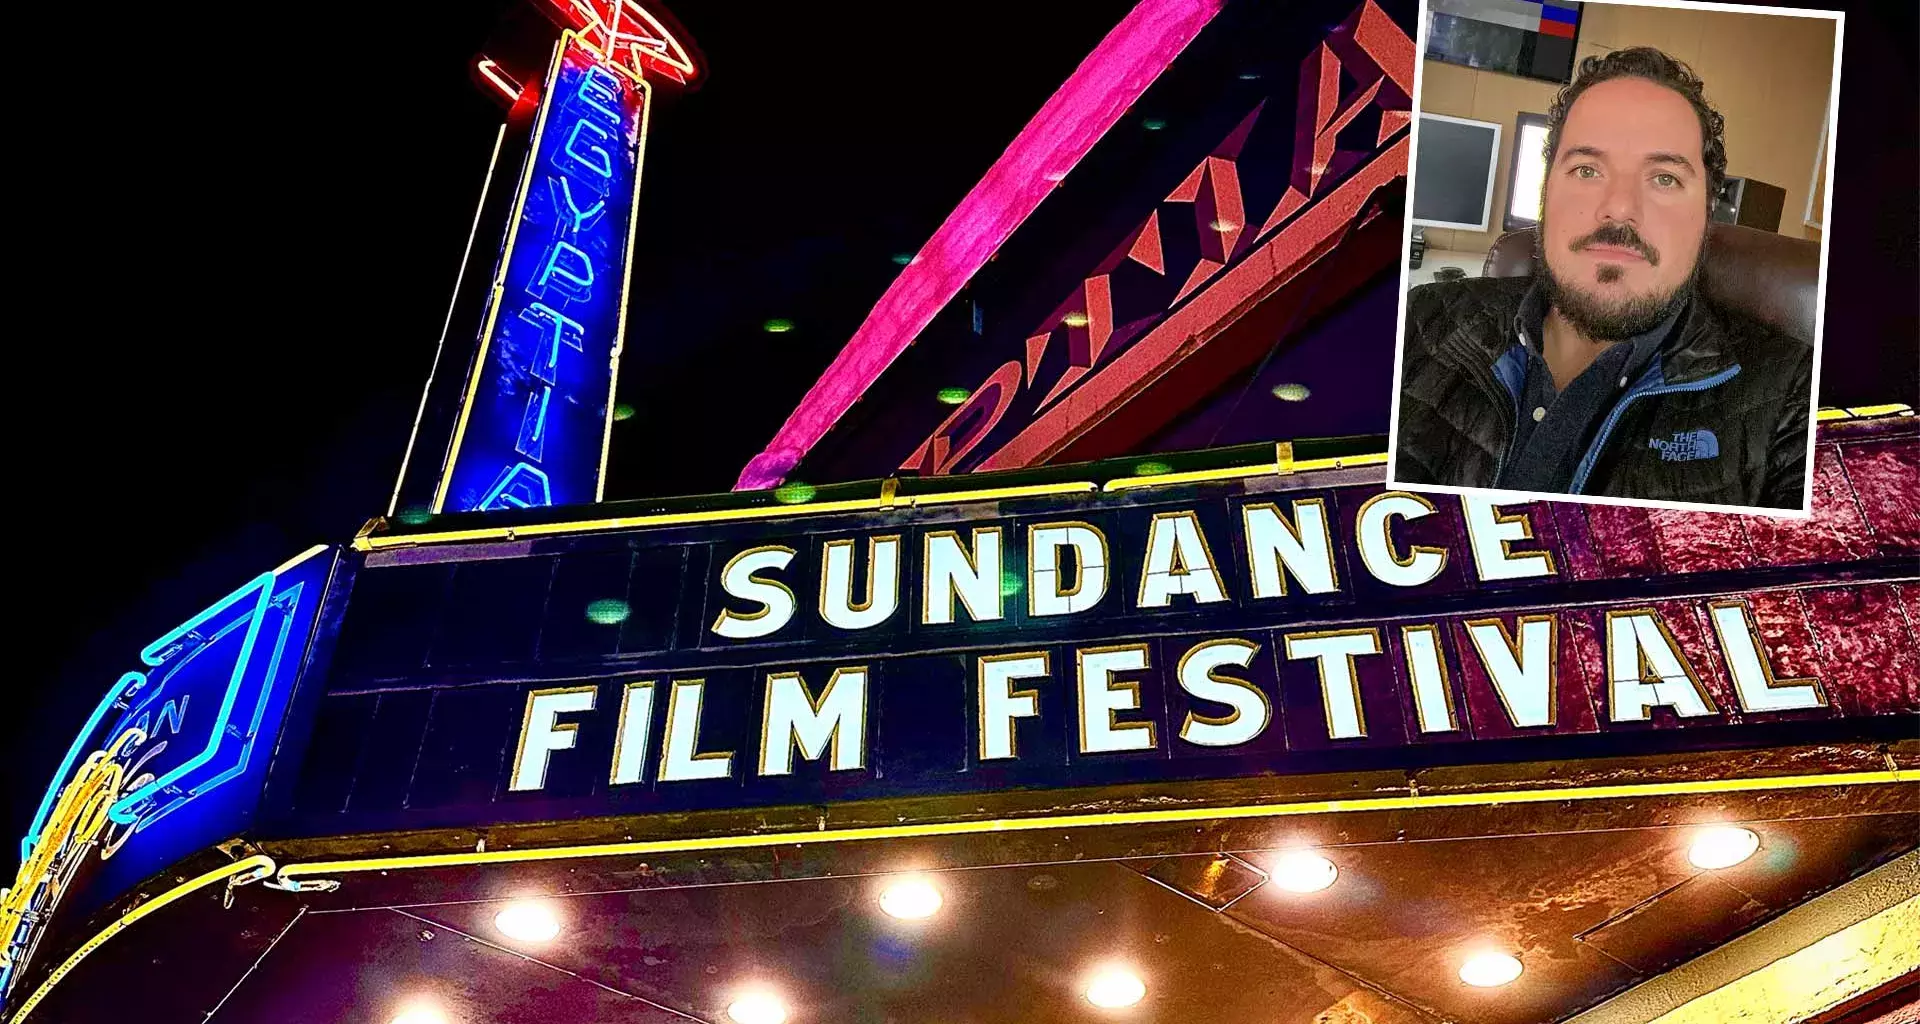 Tec graduate editor helps turn film into Sundance winner